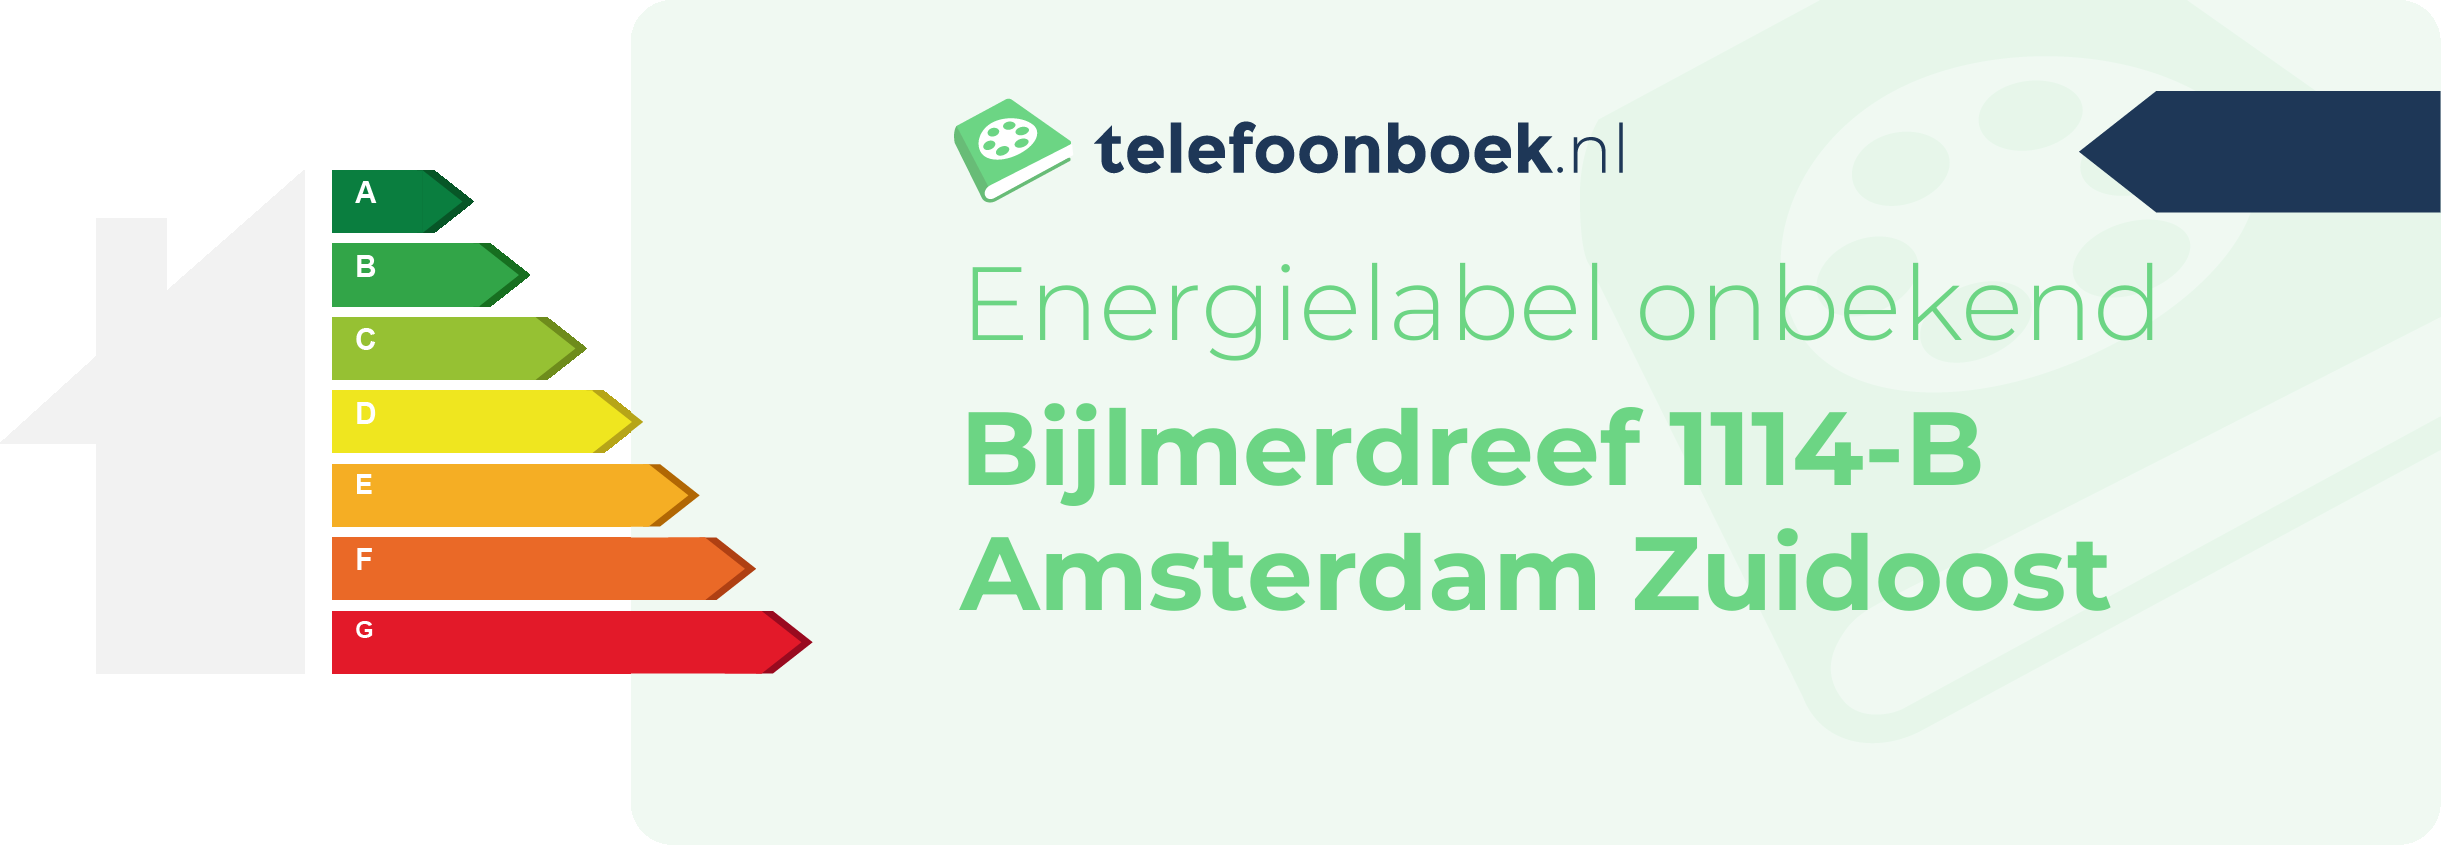 Energielabel Bijlmerdreef 1114-B Amsterdam Zuidoost